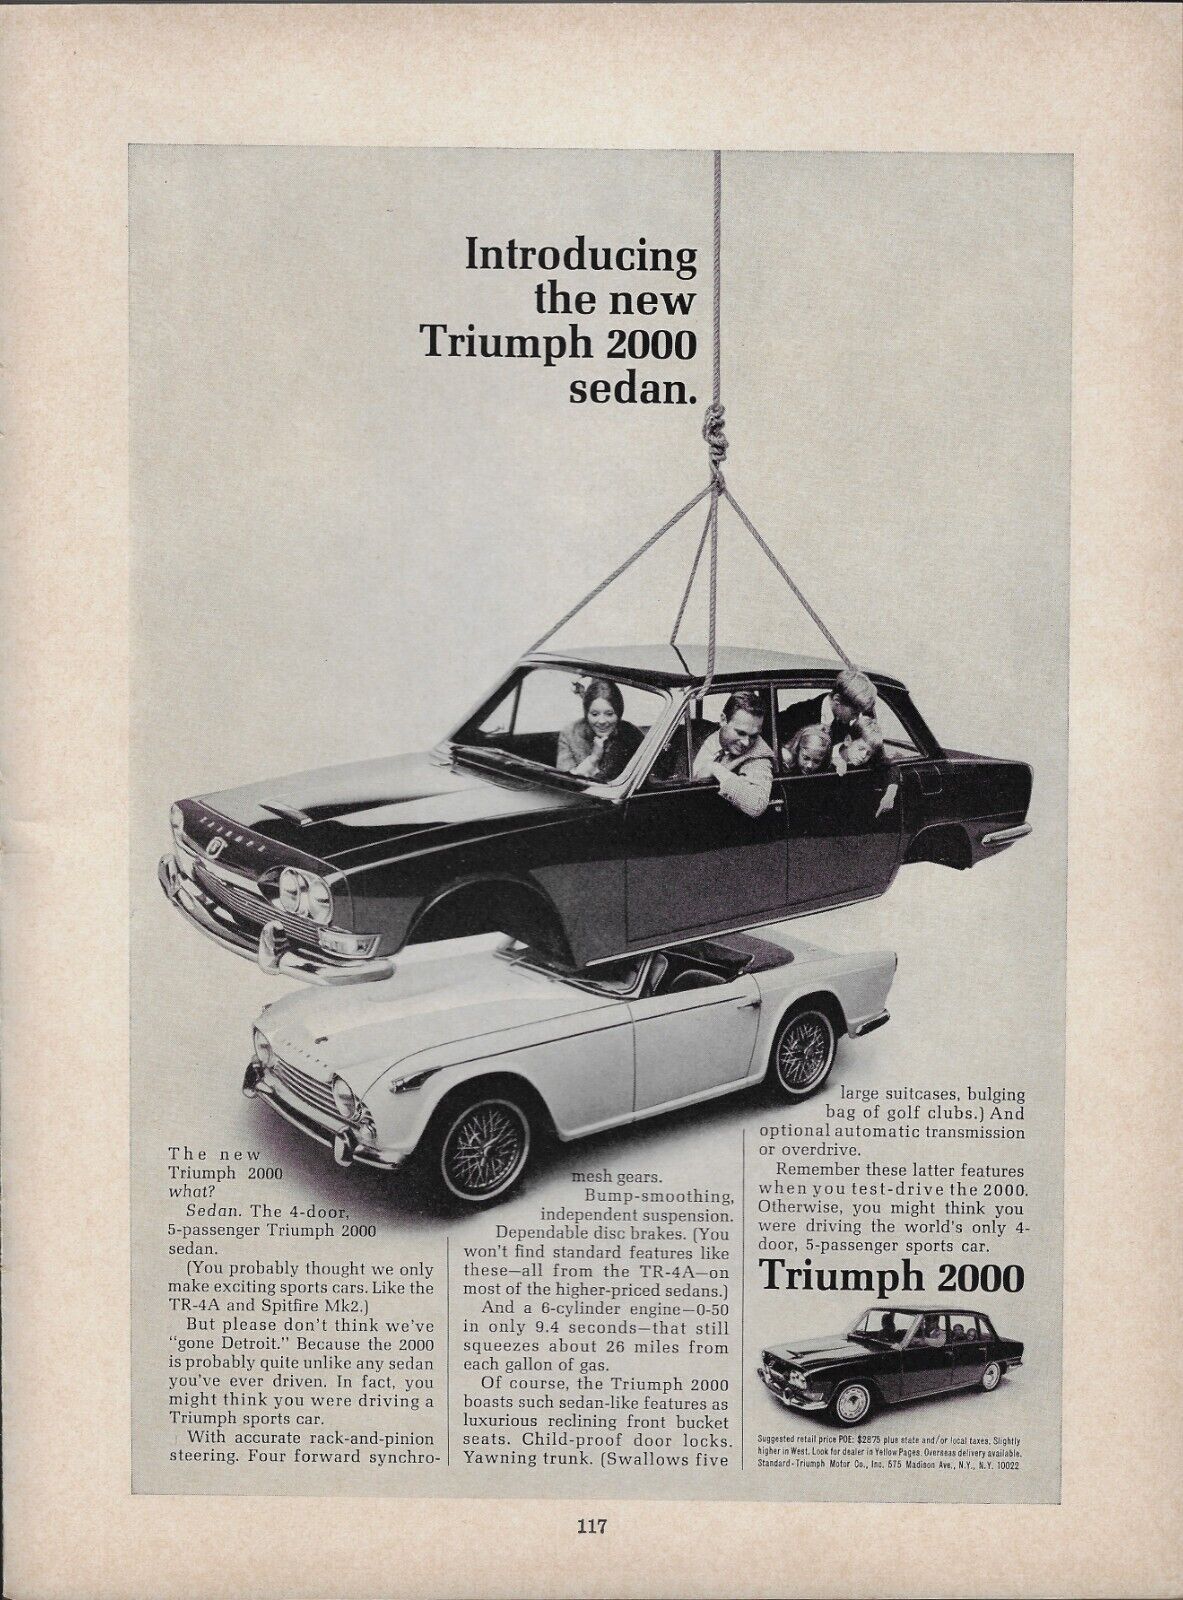 1966 Triumph 2000 Sedan 5 Passenger Like Driving Sports Car Vintage PRINT AD